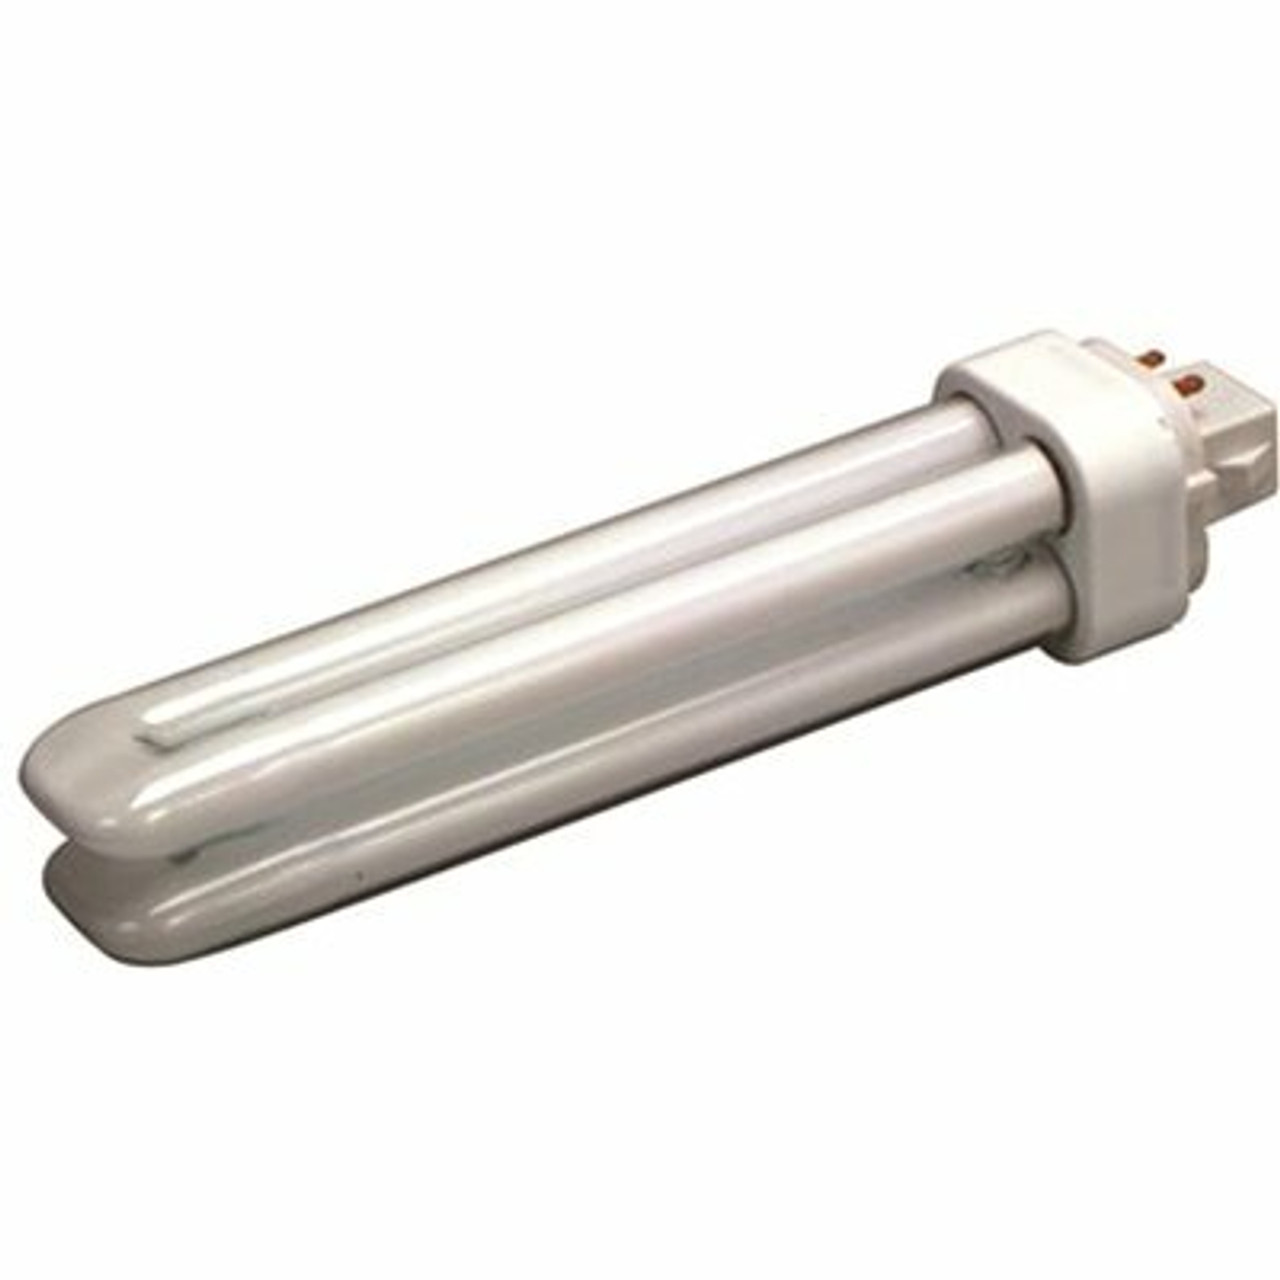 Sylvania 100-Watt Equivalent Cflni Dimmable Energy Saving Cfl Light Bulb Bright White (1-Bulb)